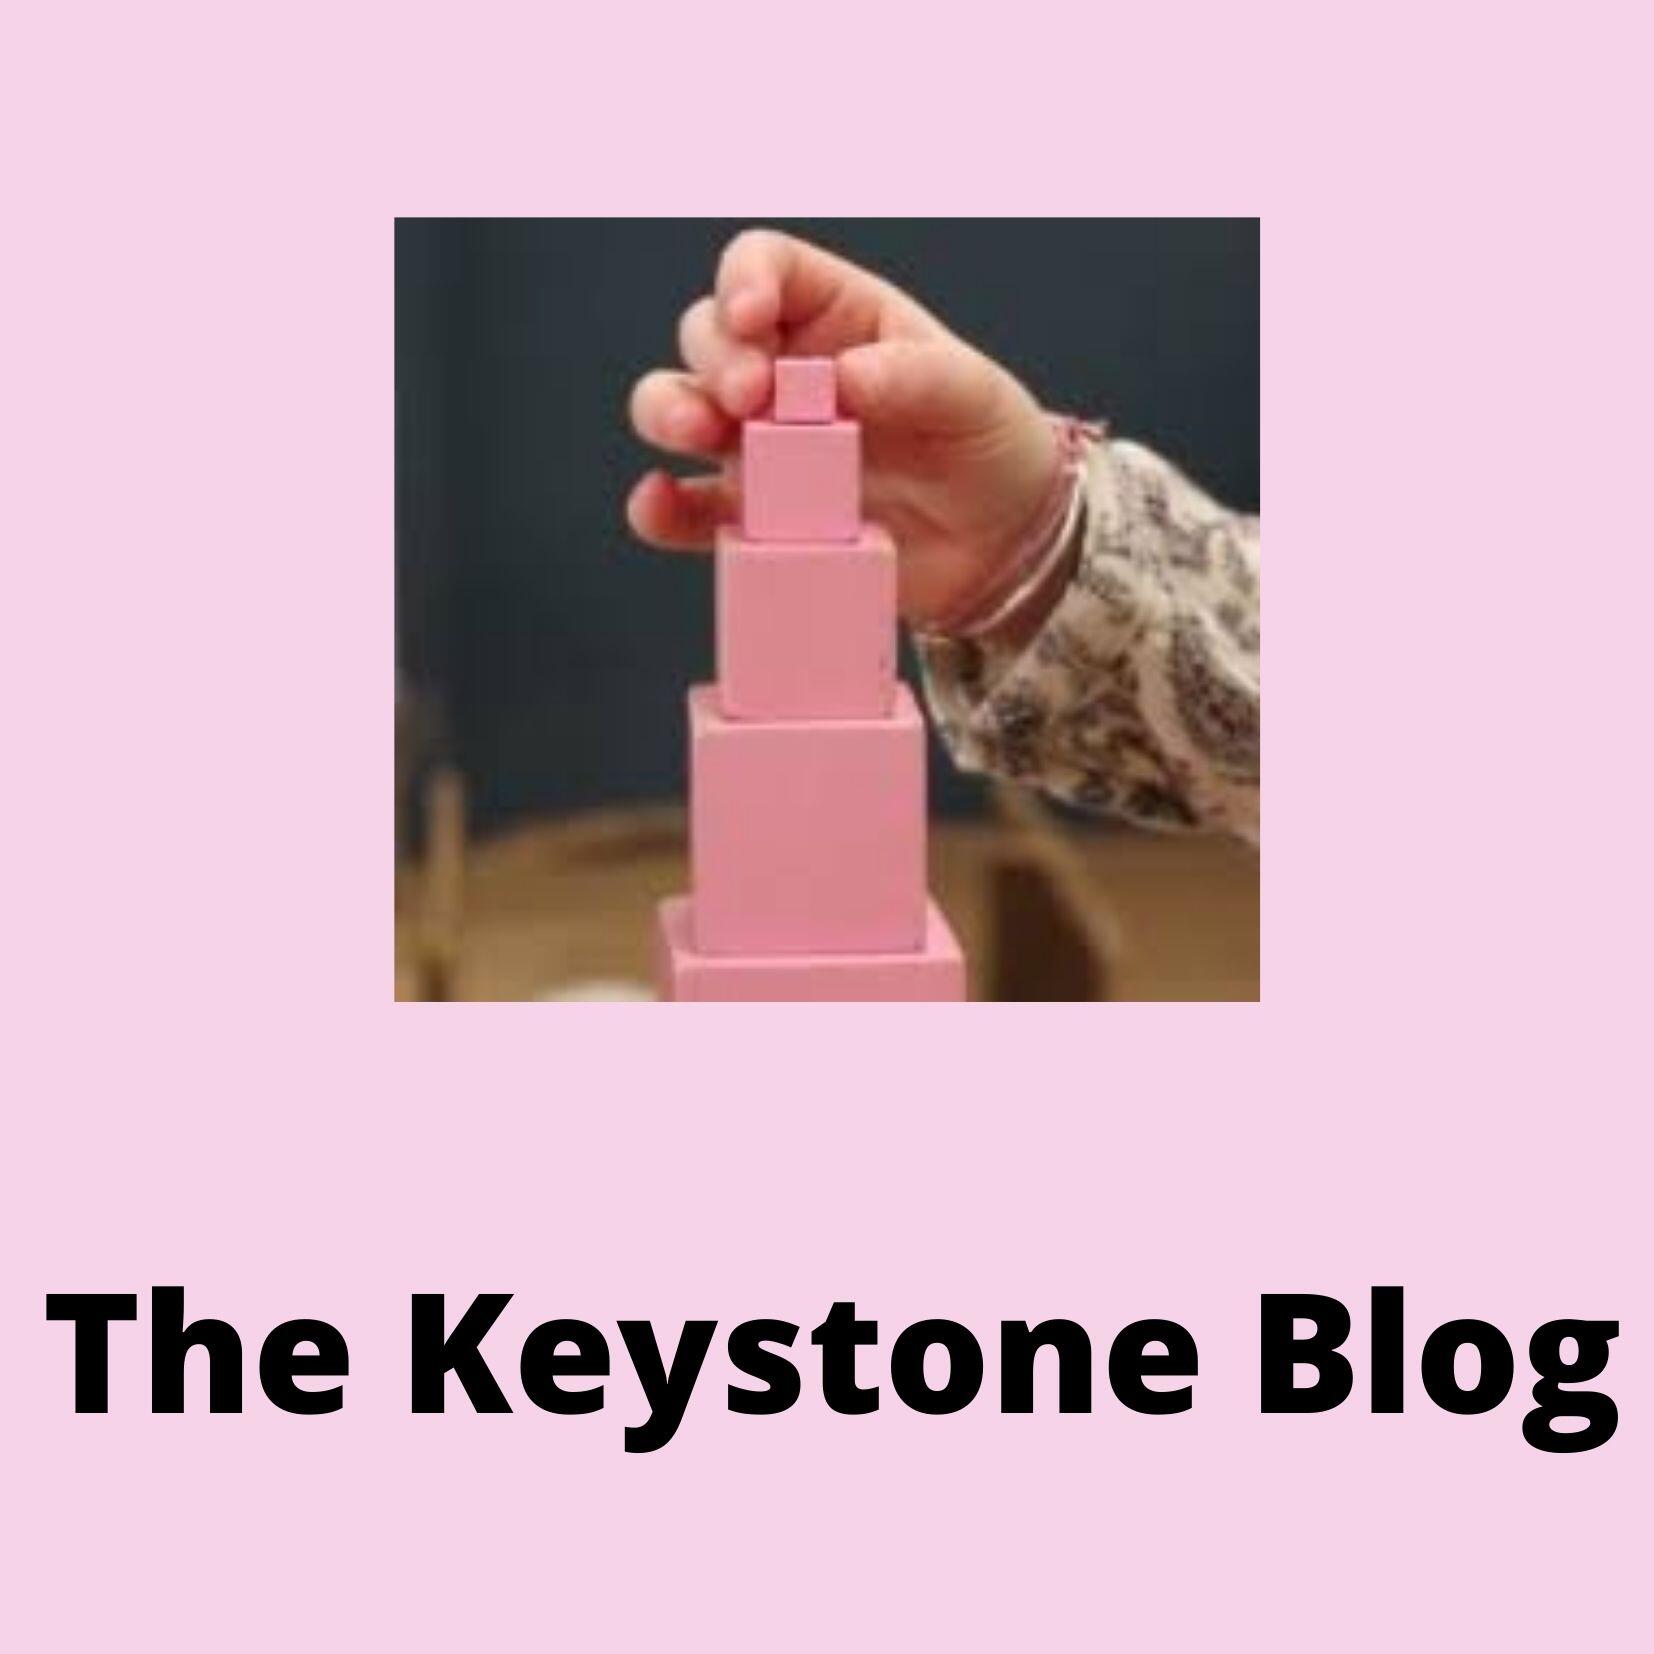 The Keystone Blog